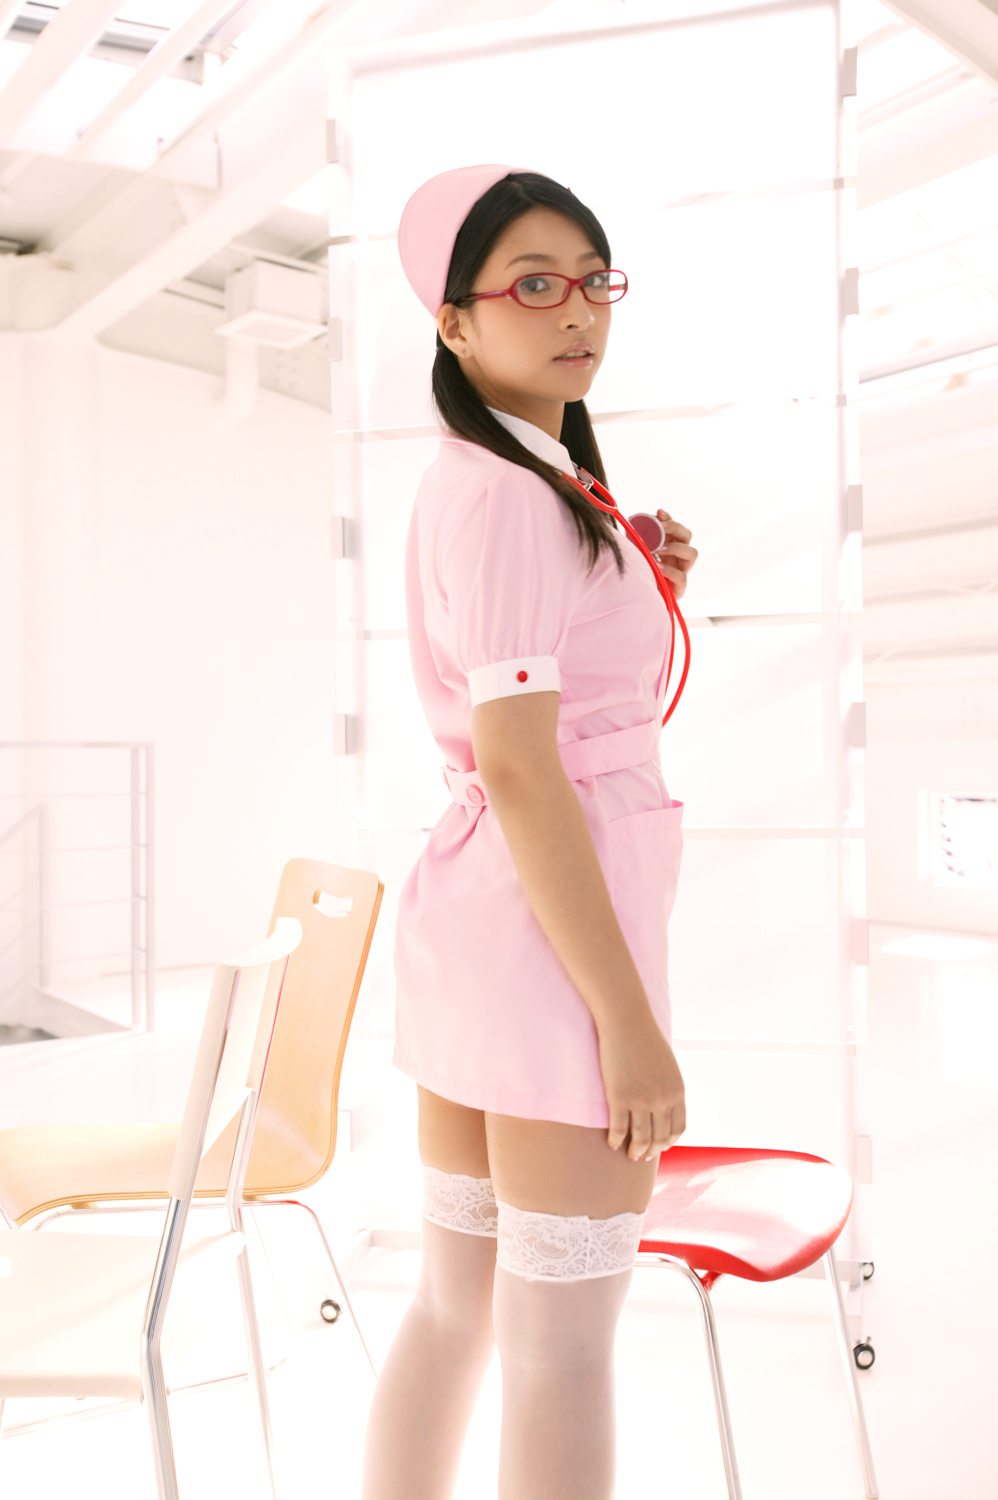 Nina South sexy nurse animation reality show(2)